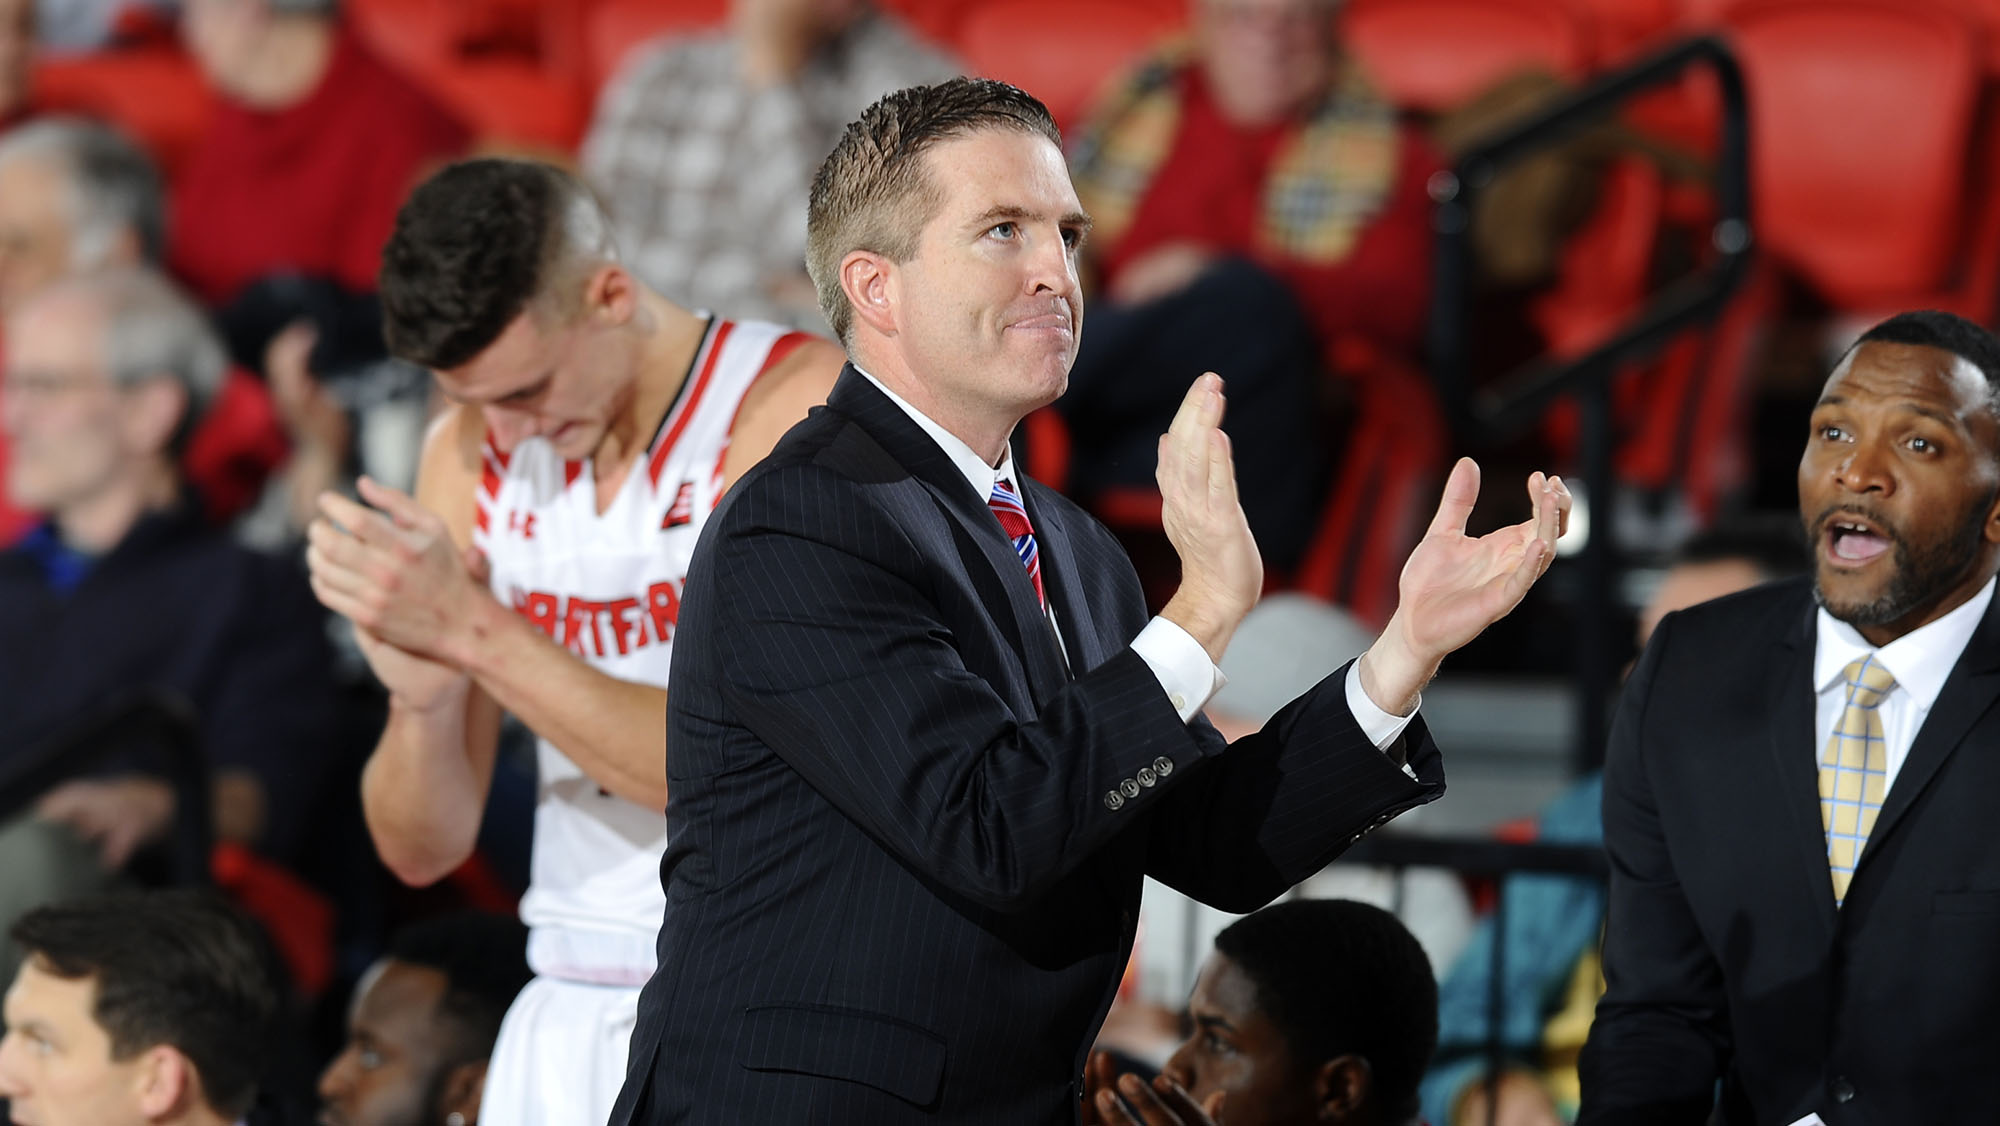 Coach John Gallagher Resigns as Head Coach of the University of Hartford Men’s Basketball Team